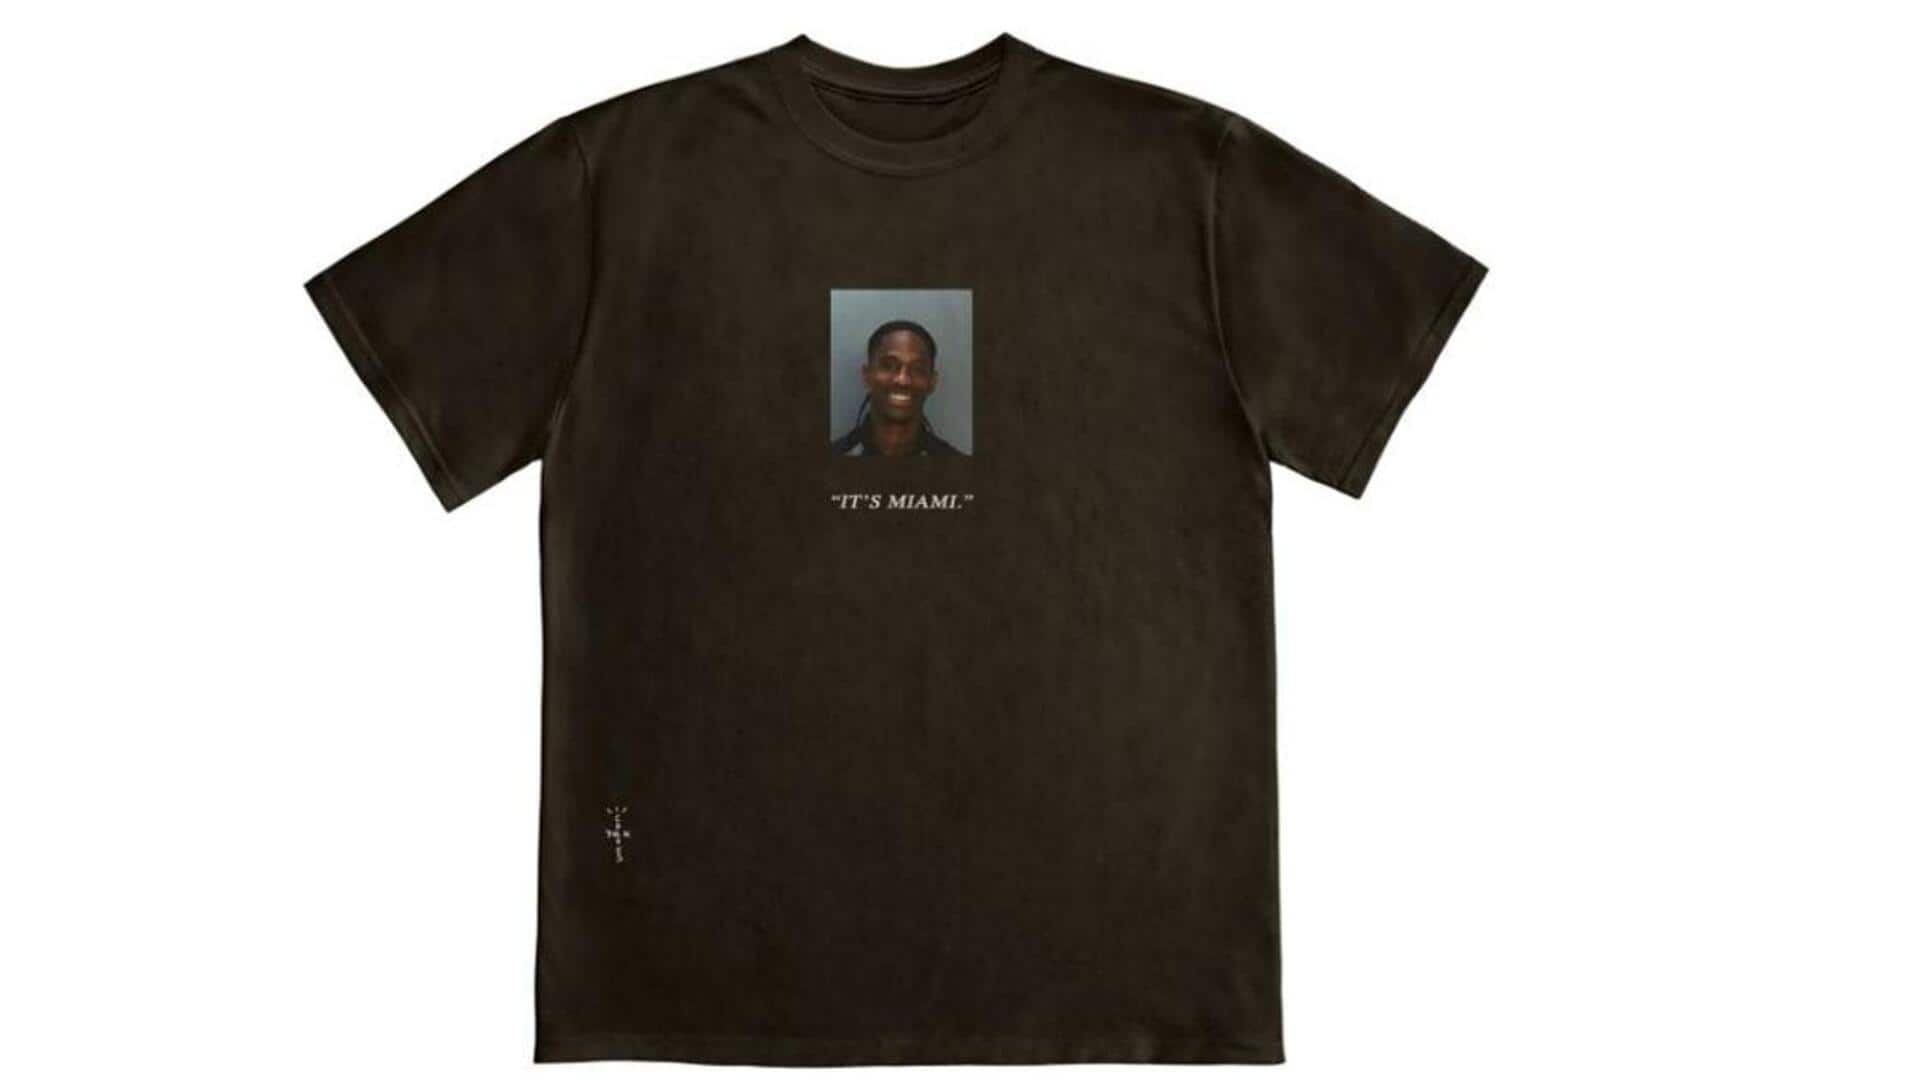 Day after arrest, Travis Scott releases T-shirt featuring his mugshot